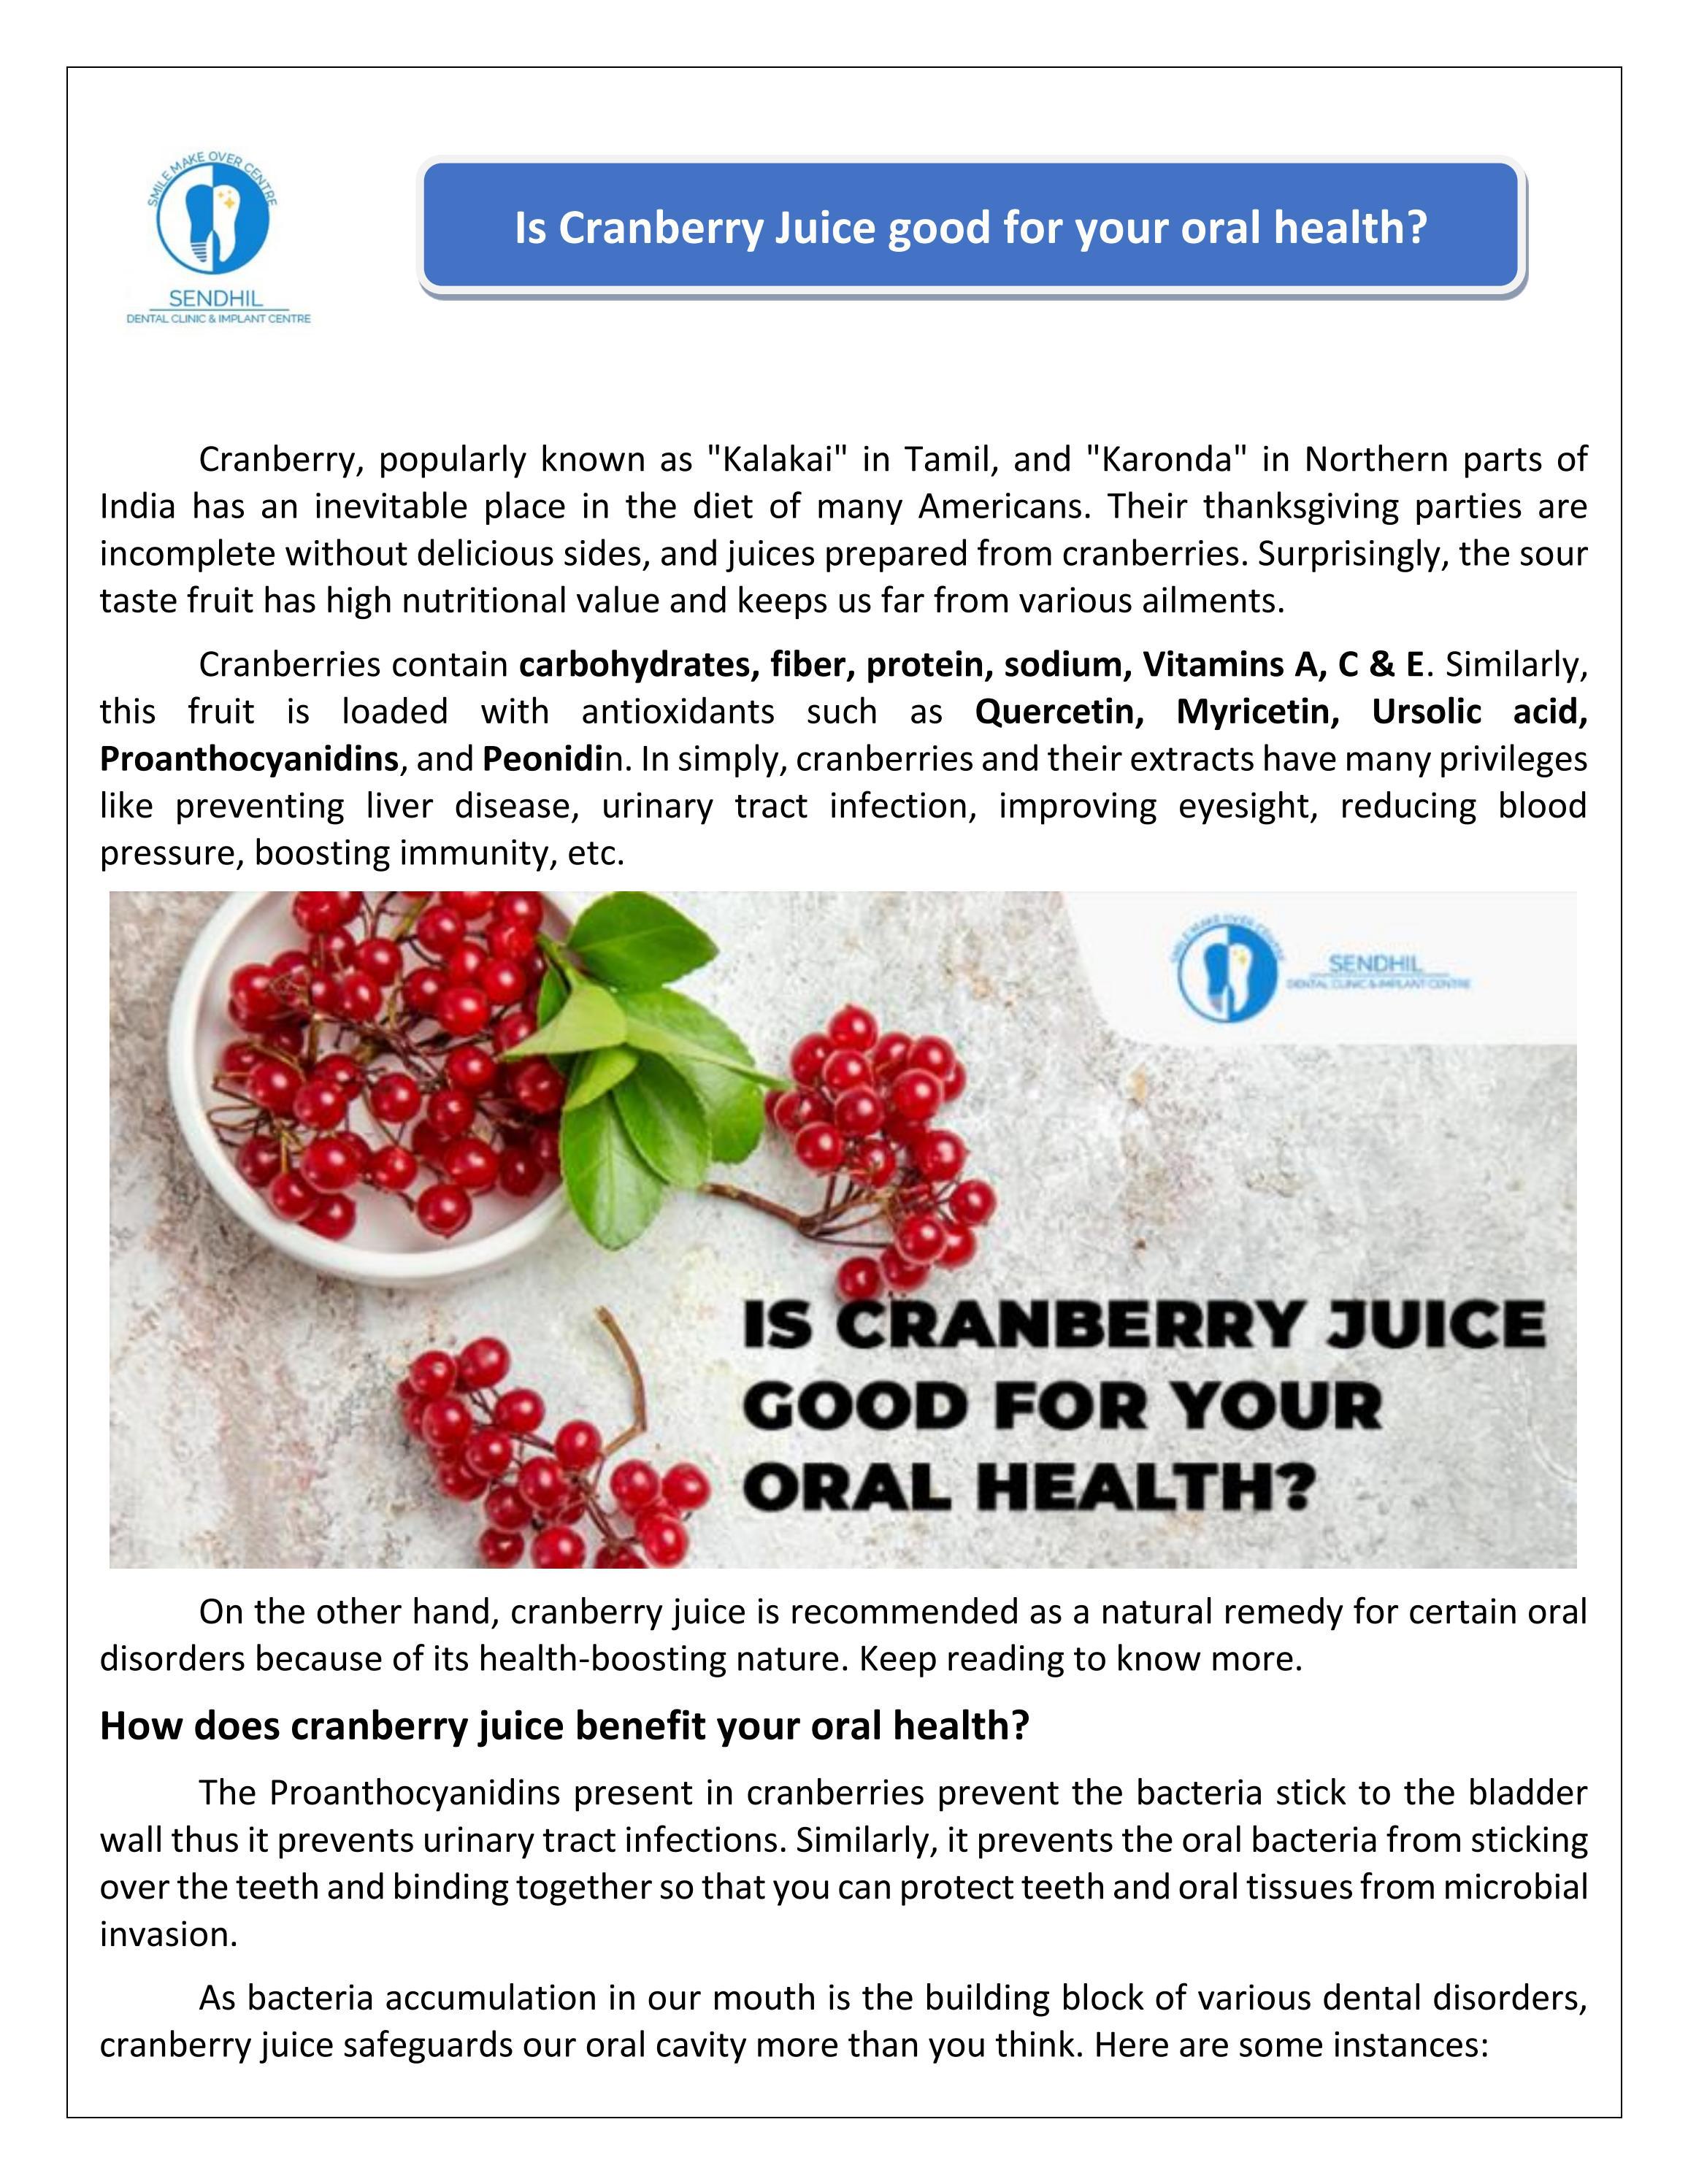 is cranberry juice acidic